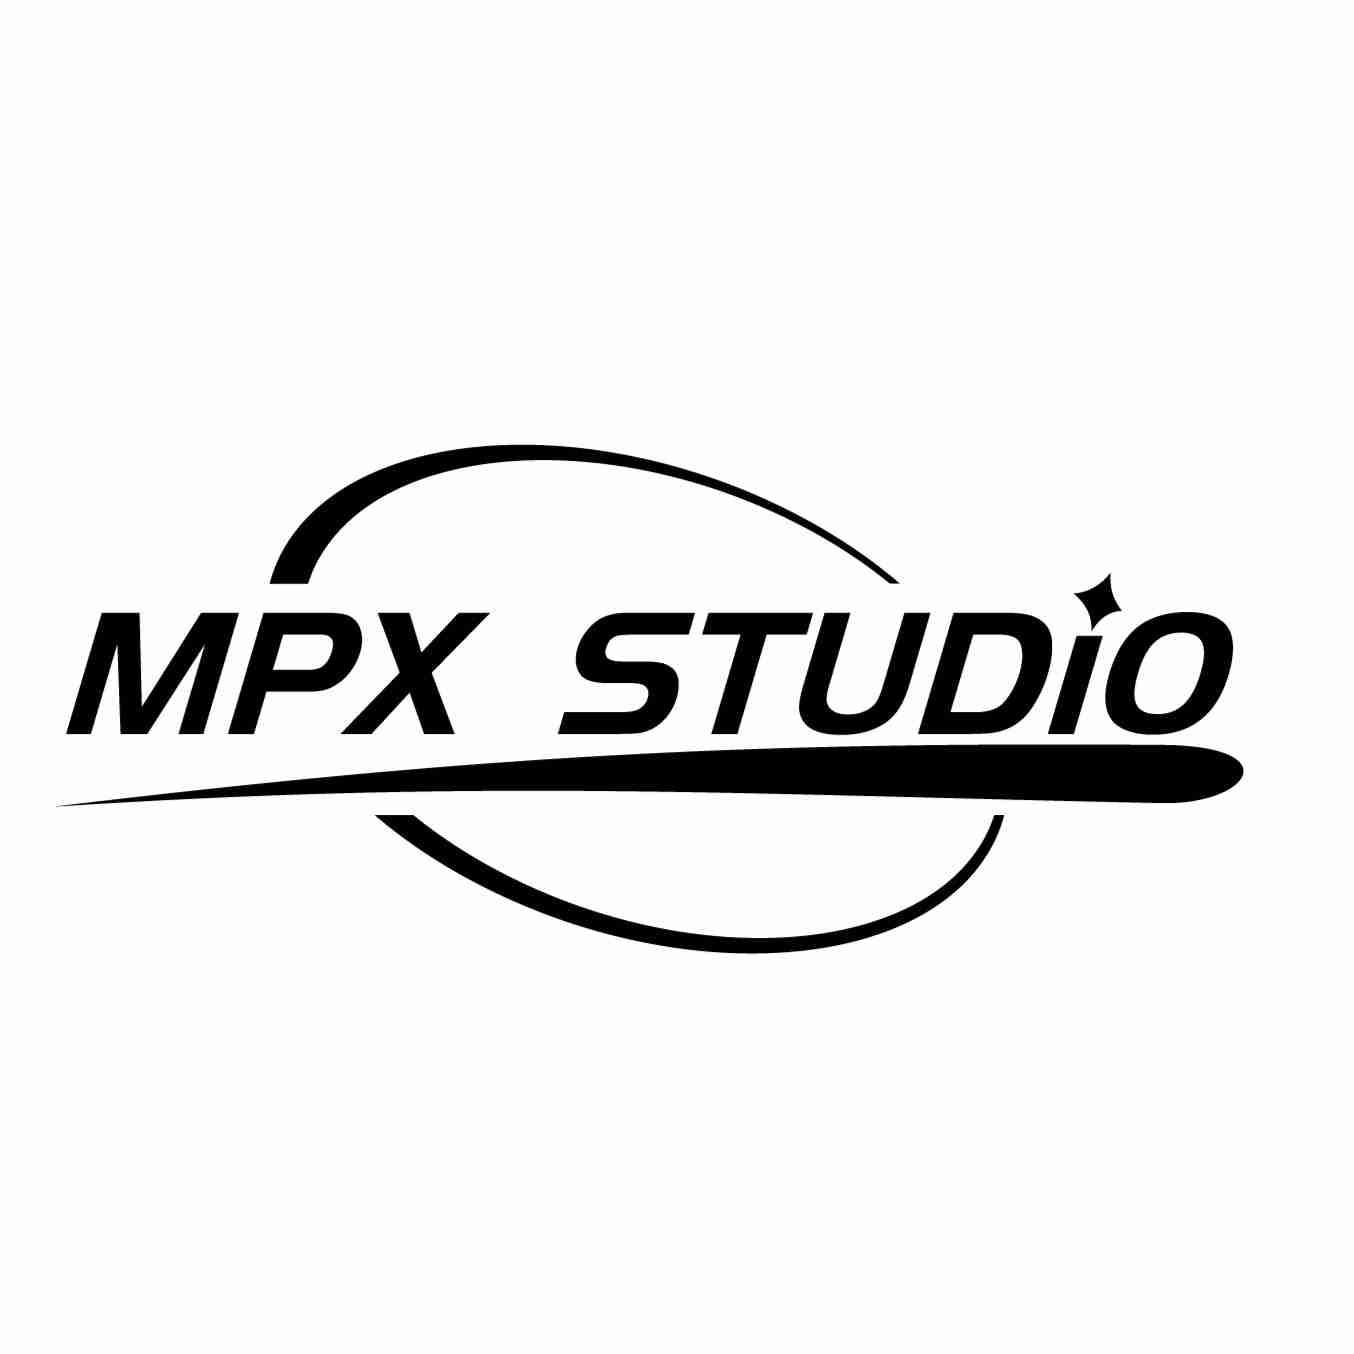 MPX STUDIO